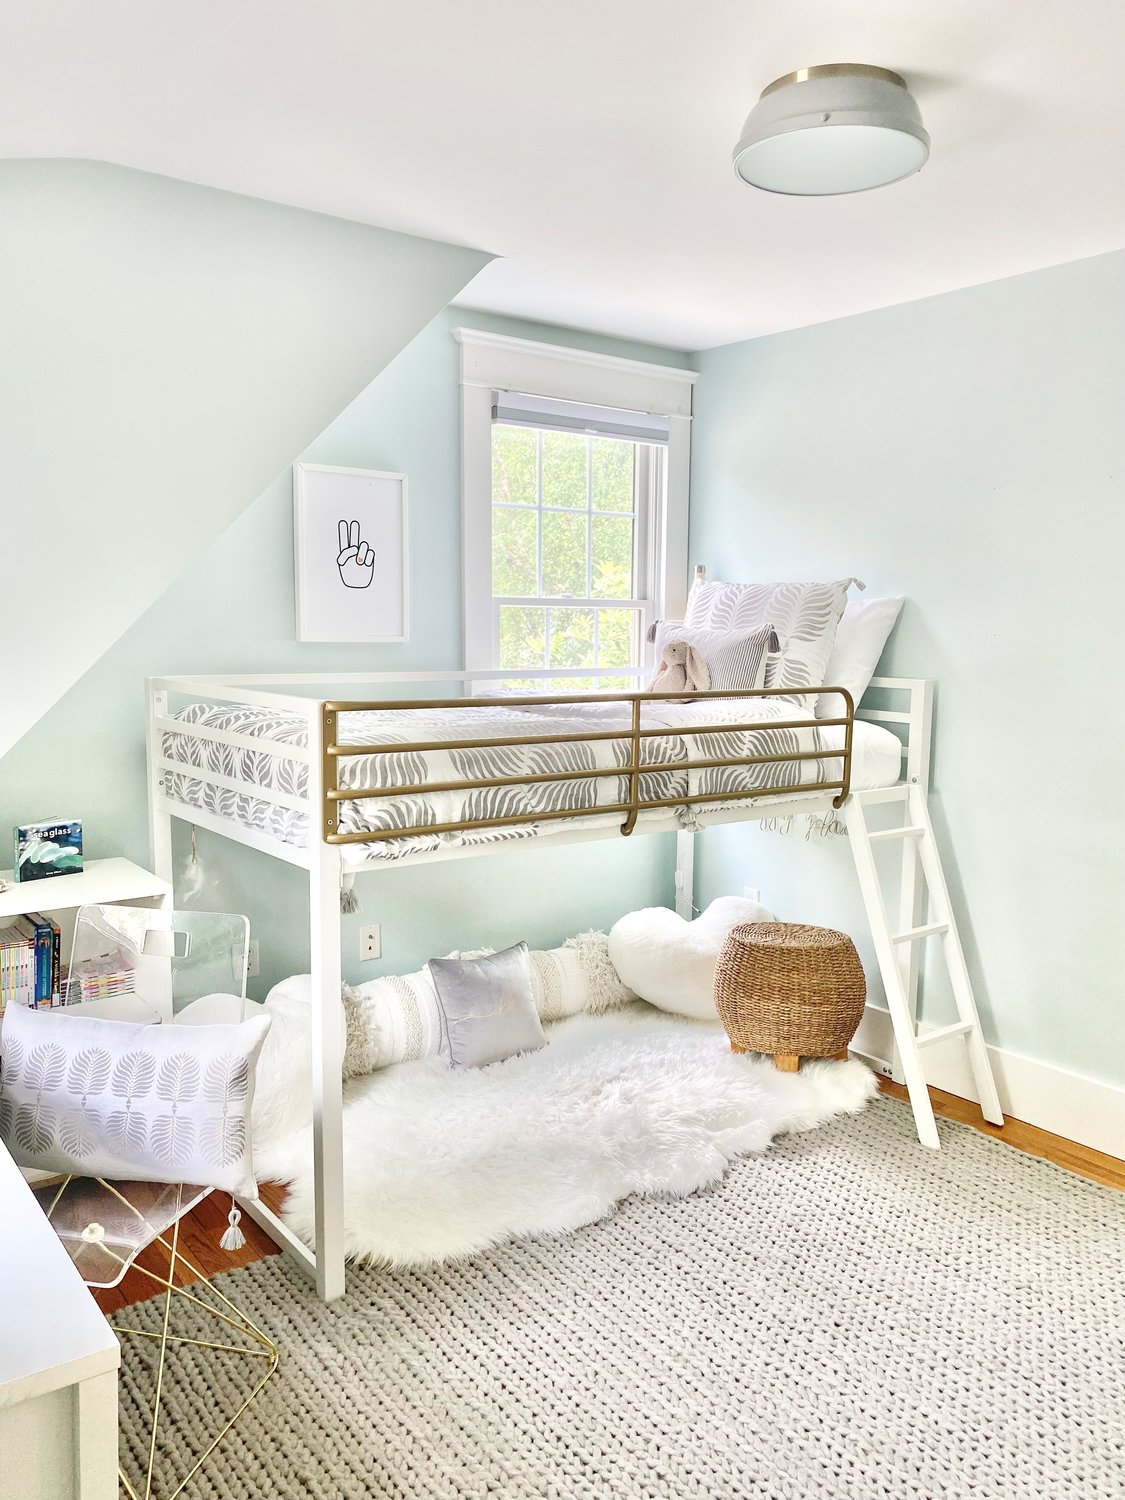 In smaller spaces, utilize a loft bed to create a cozy escape.